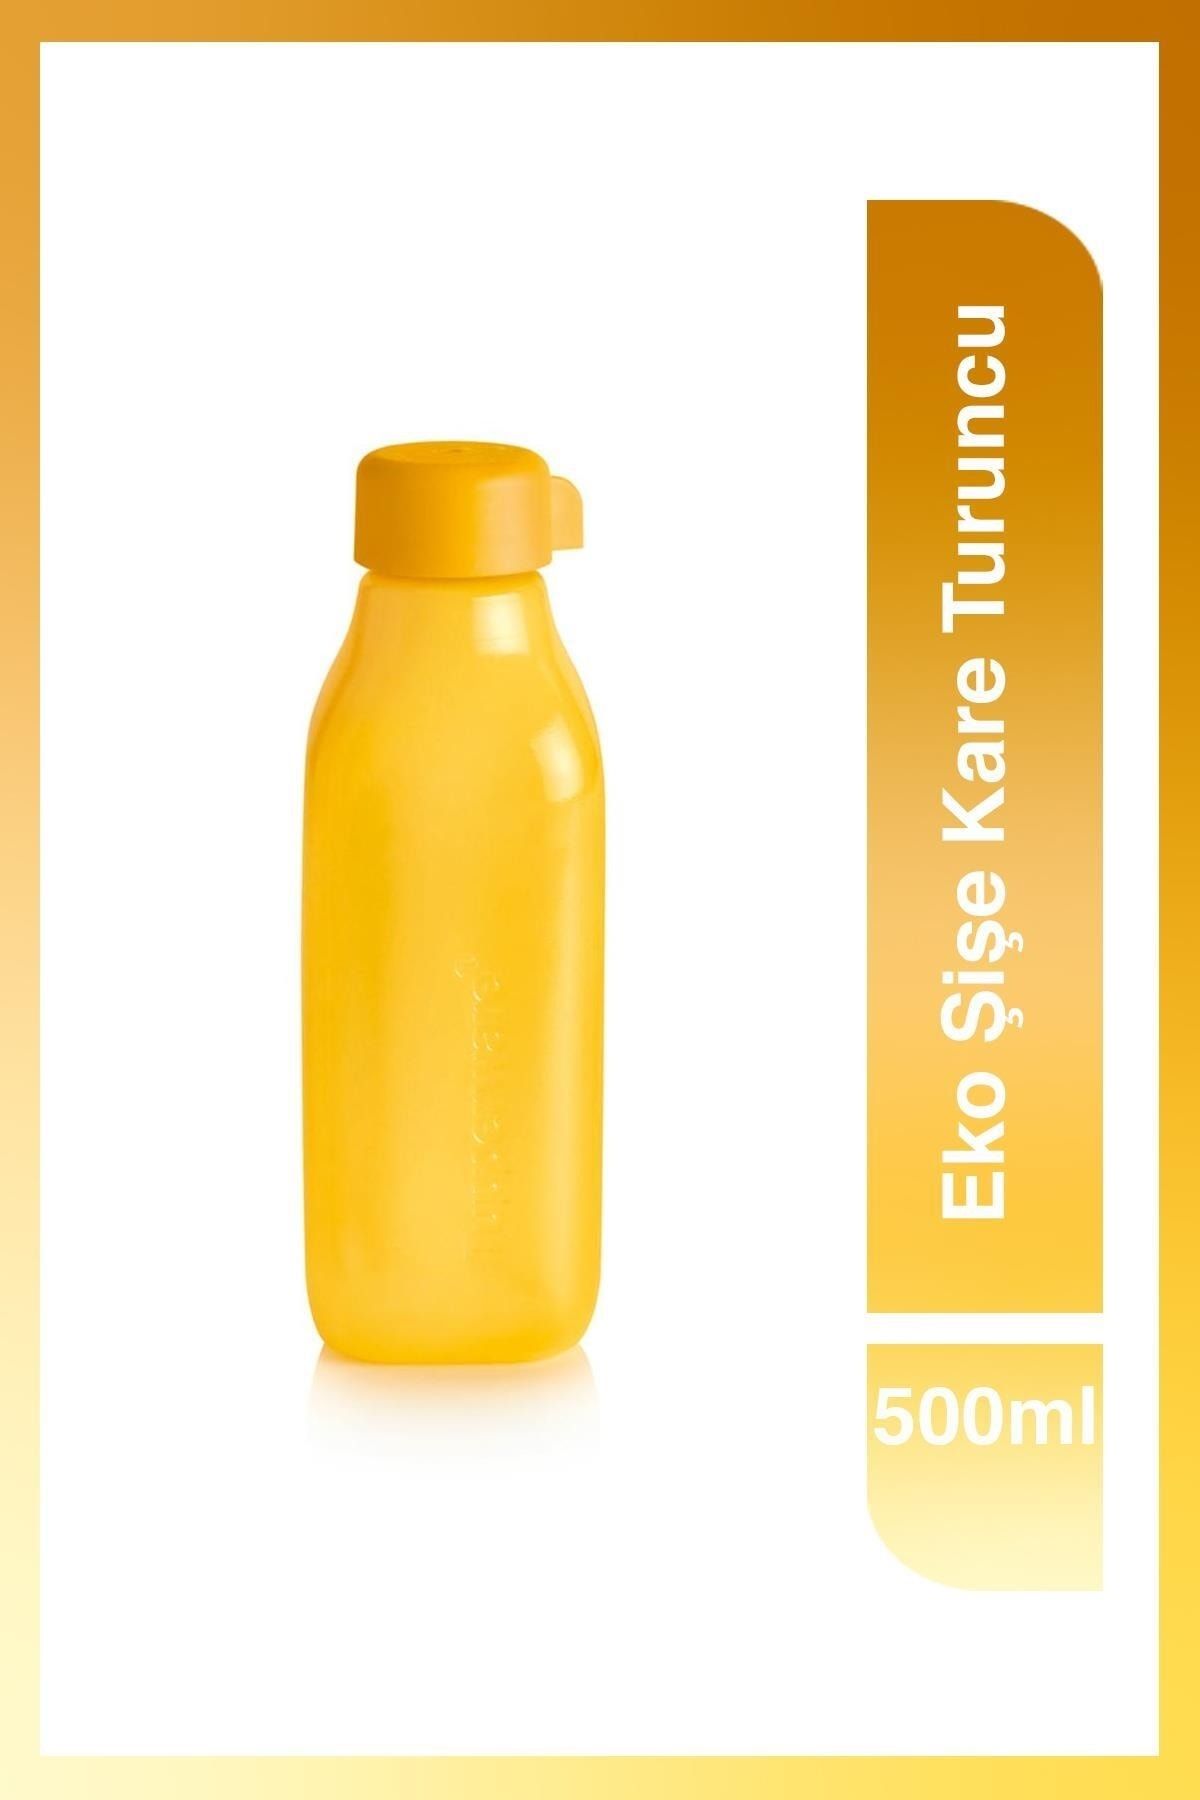 Tupperware] Eco Bottle 500 ml in purple, Furniture & Home Living